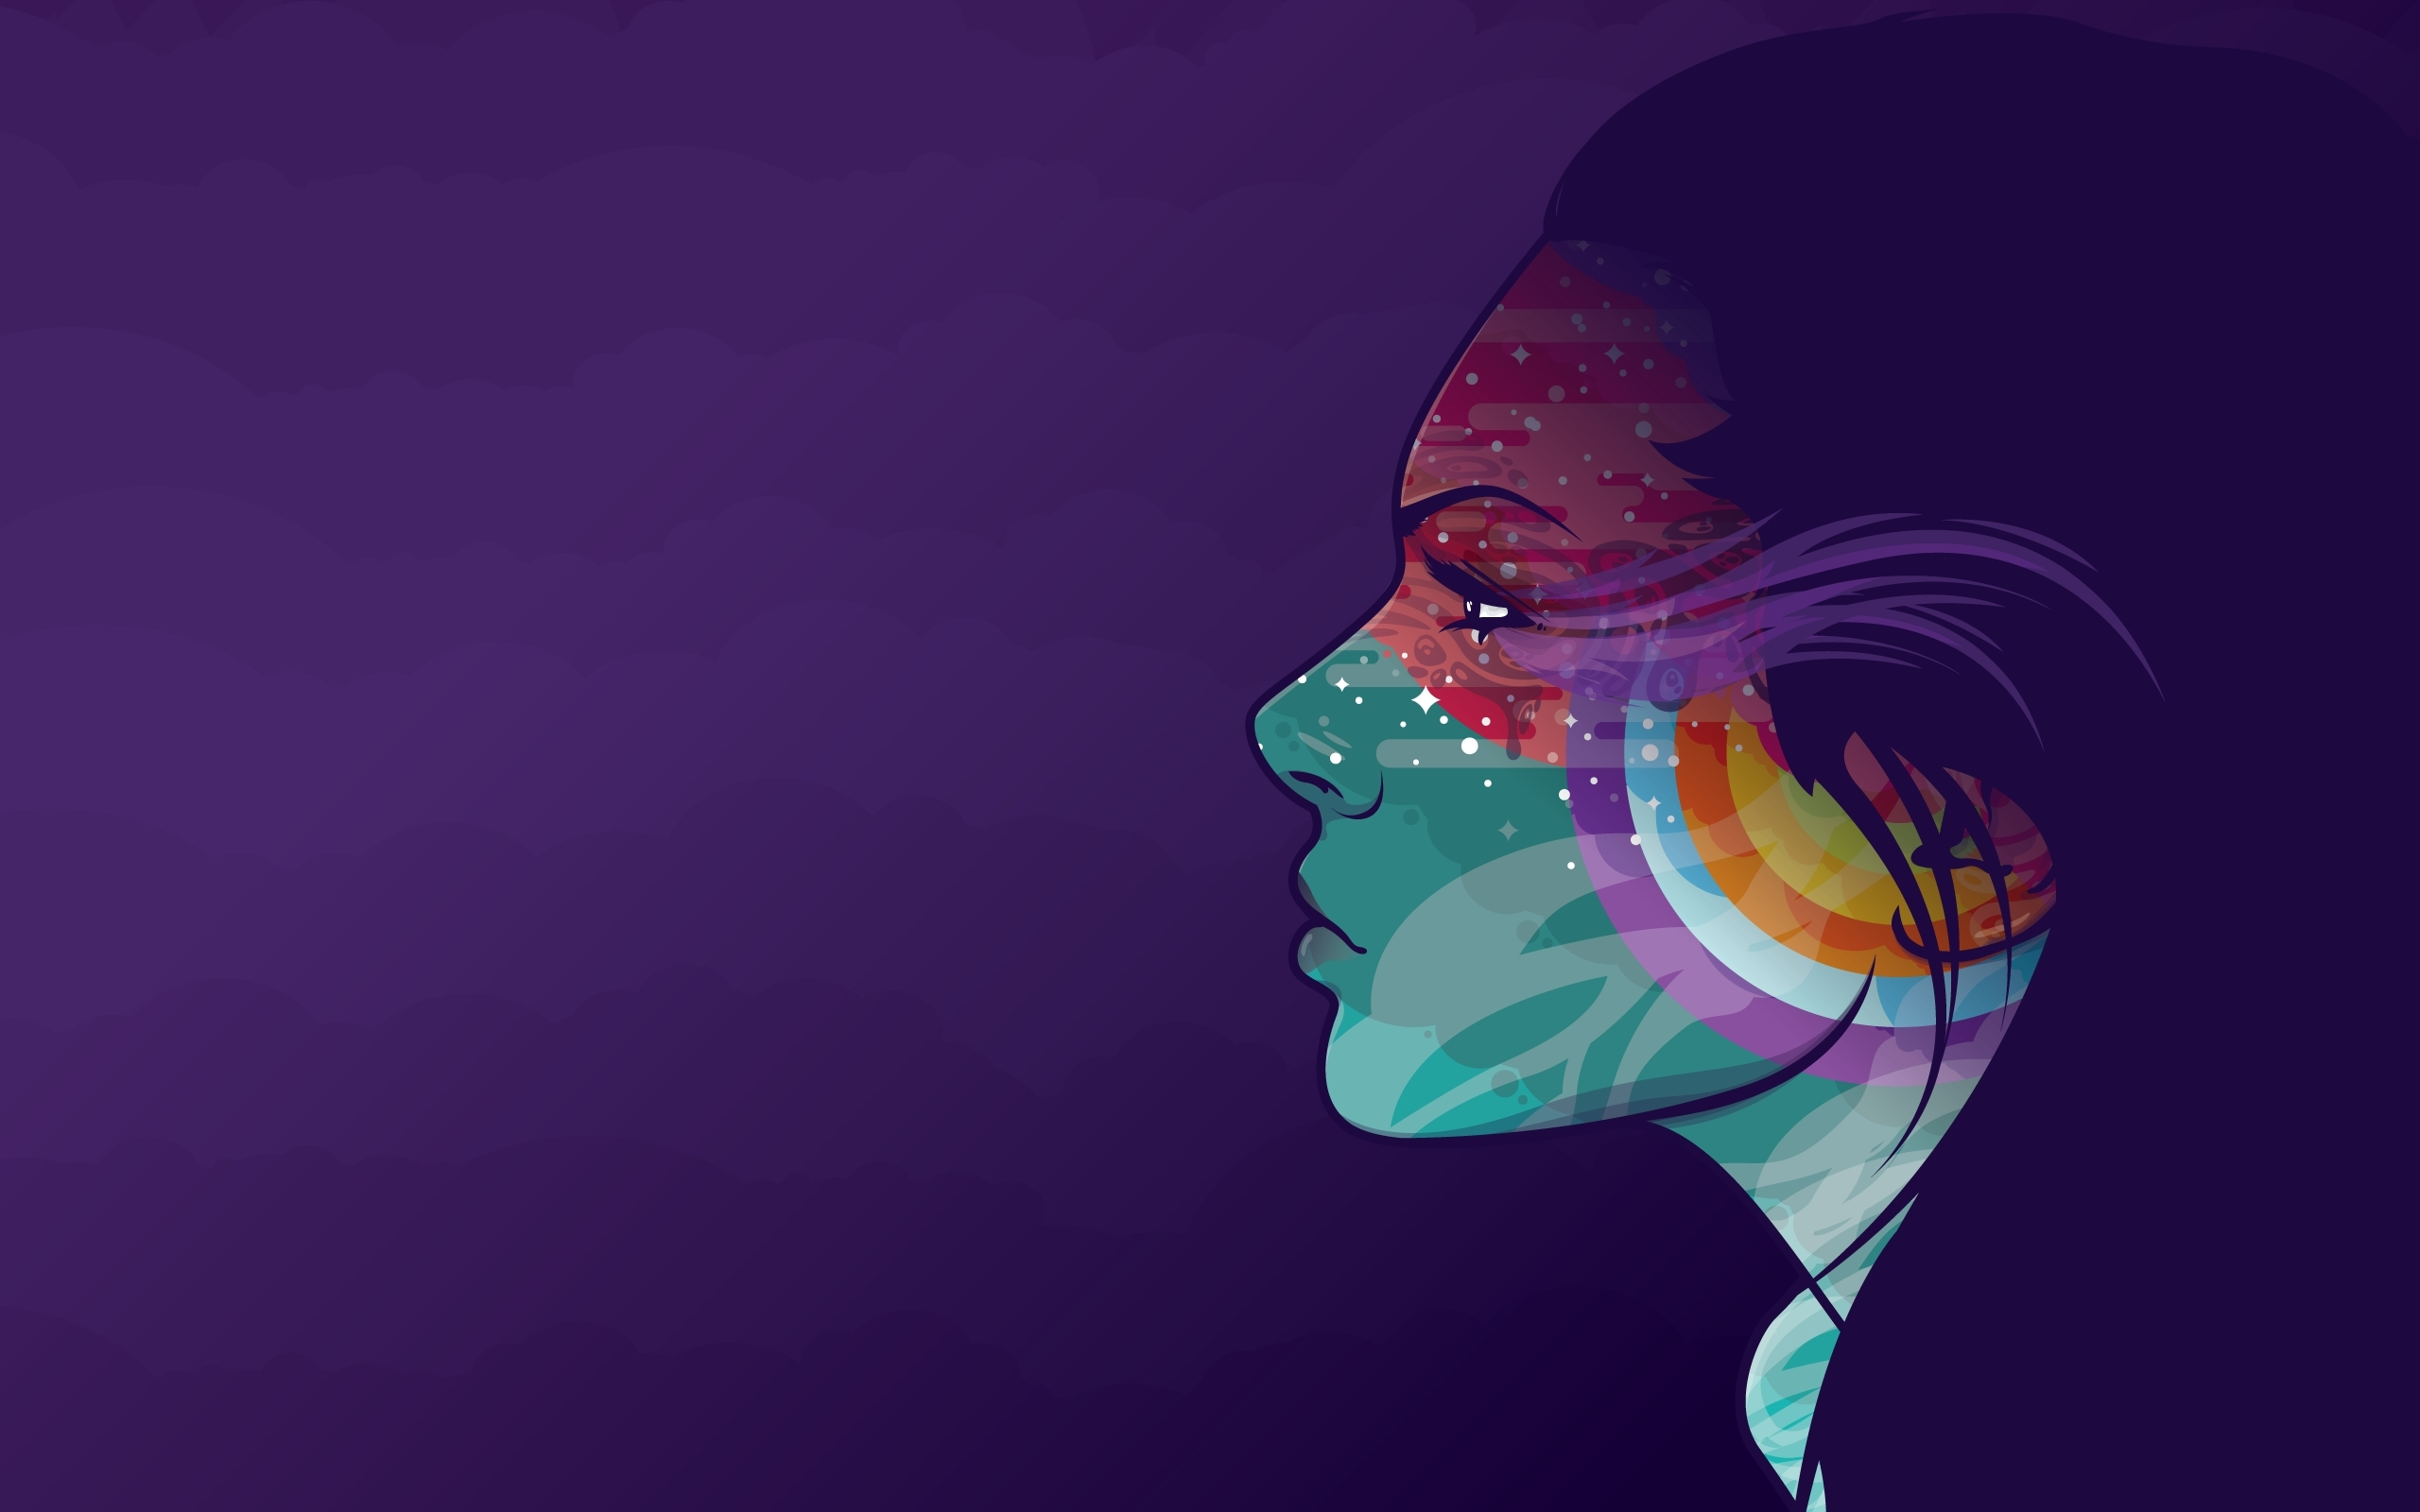 women_multicolor_rainbows_profile_faces_jthree_concepts_purple_background_jared_nickerson_2560x16_Wallpaper_2560x1600_www.wall321.com.jpg